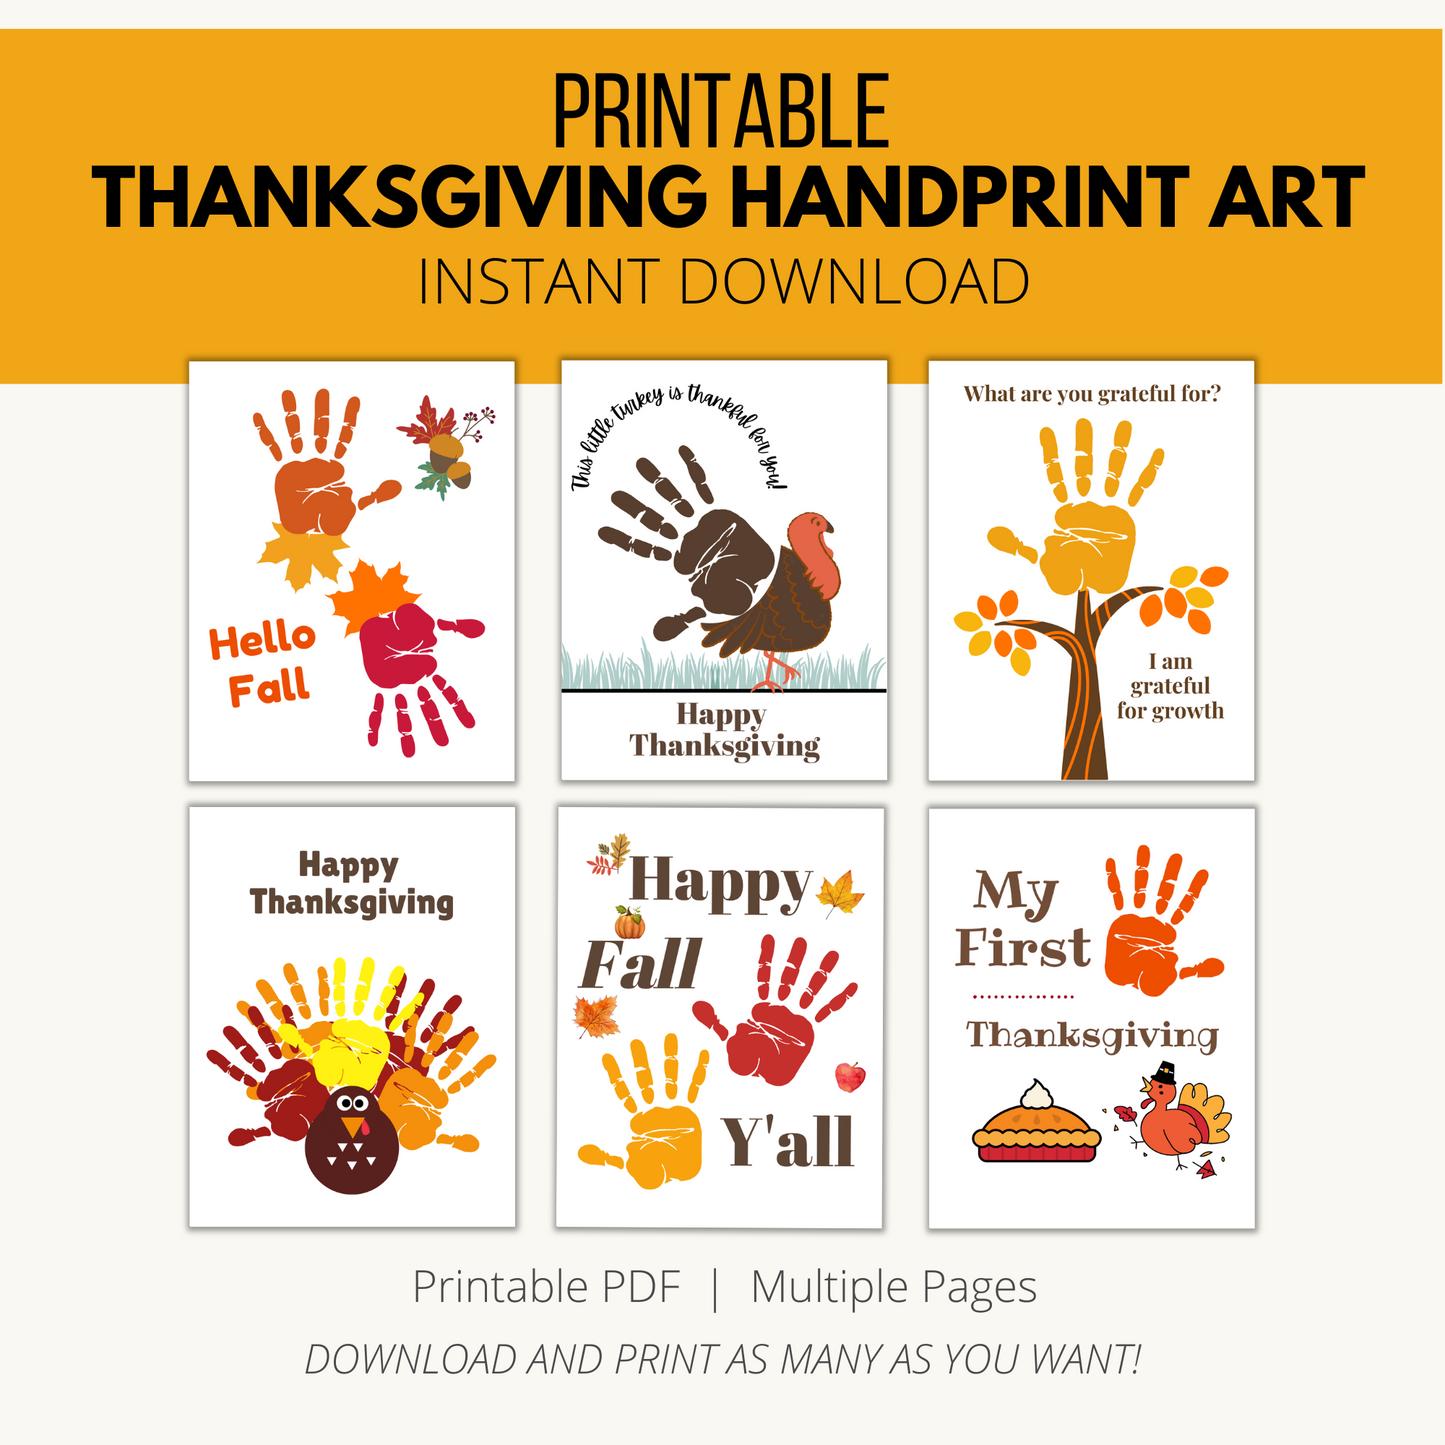 Printable Thanksgiving Handprint Art